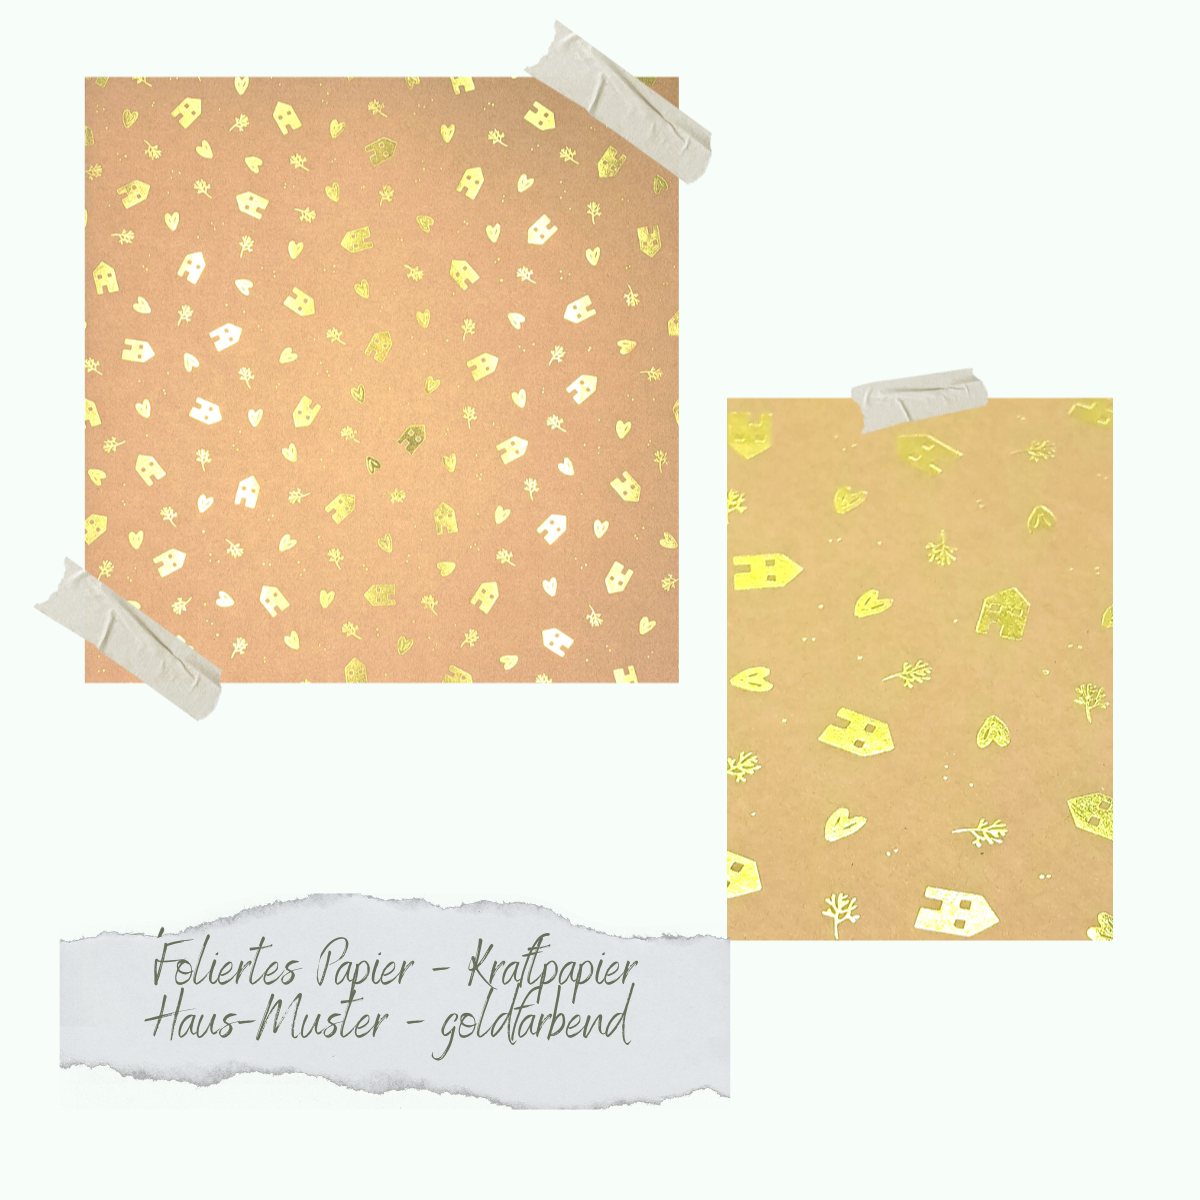 Foliertes Papier - Kraftpapier - Haus-Muster - goldfarbend